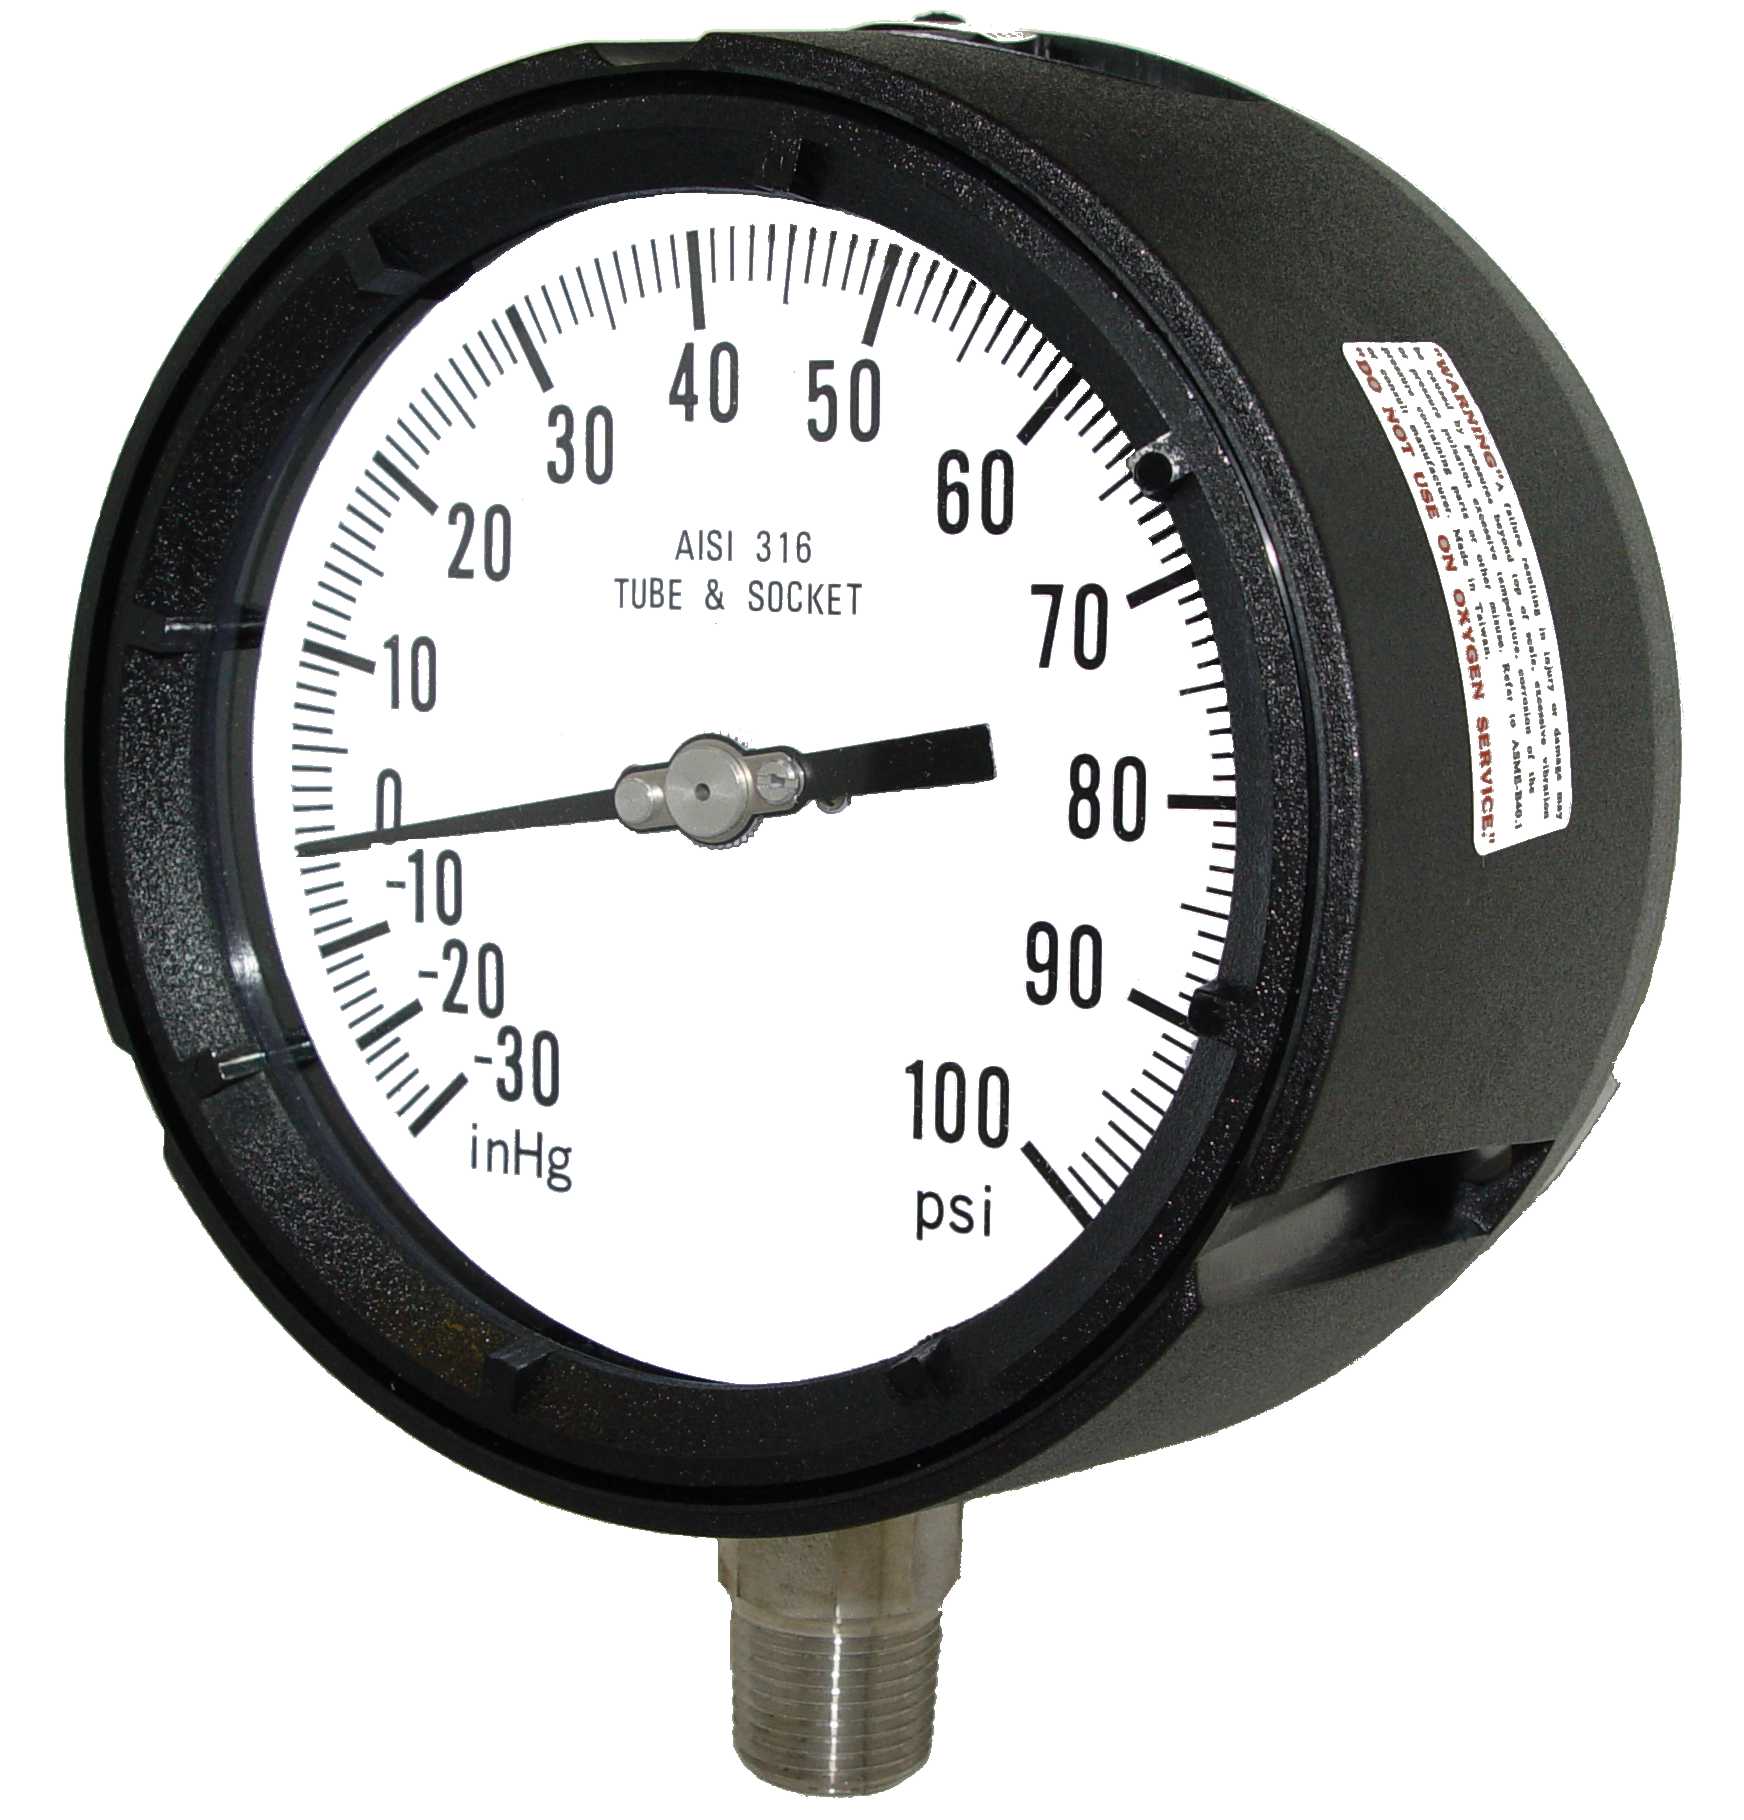 Model 4501-452G gauge, 4.5 dial, 1/2 mount, 0-200 PSI